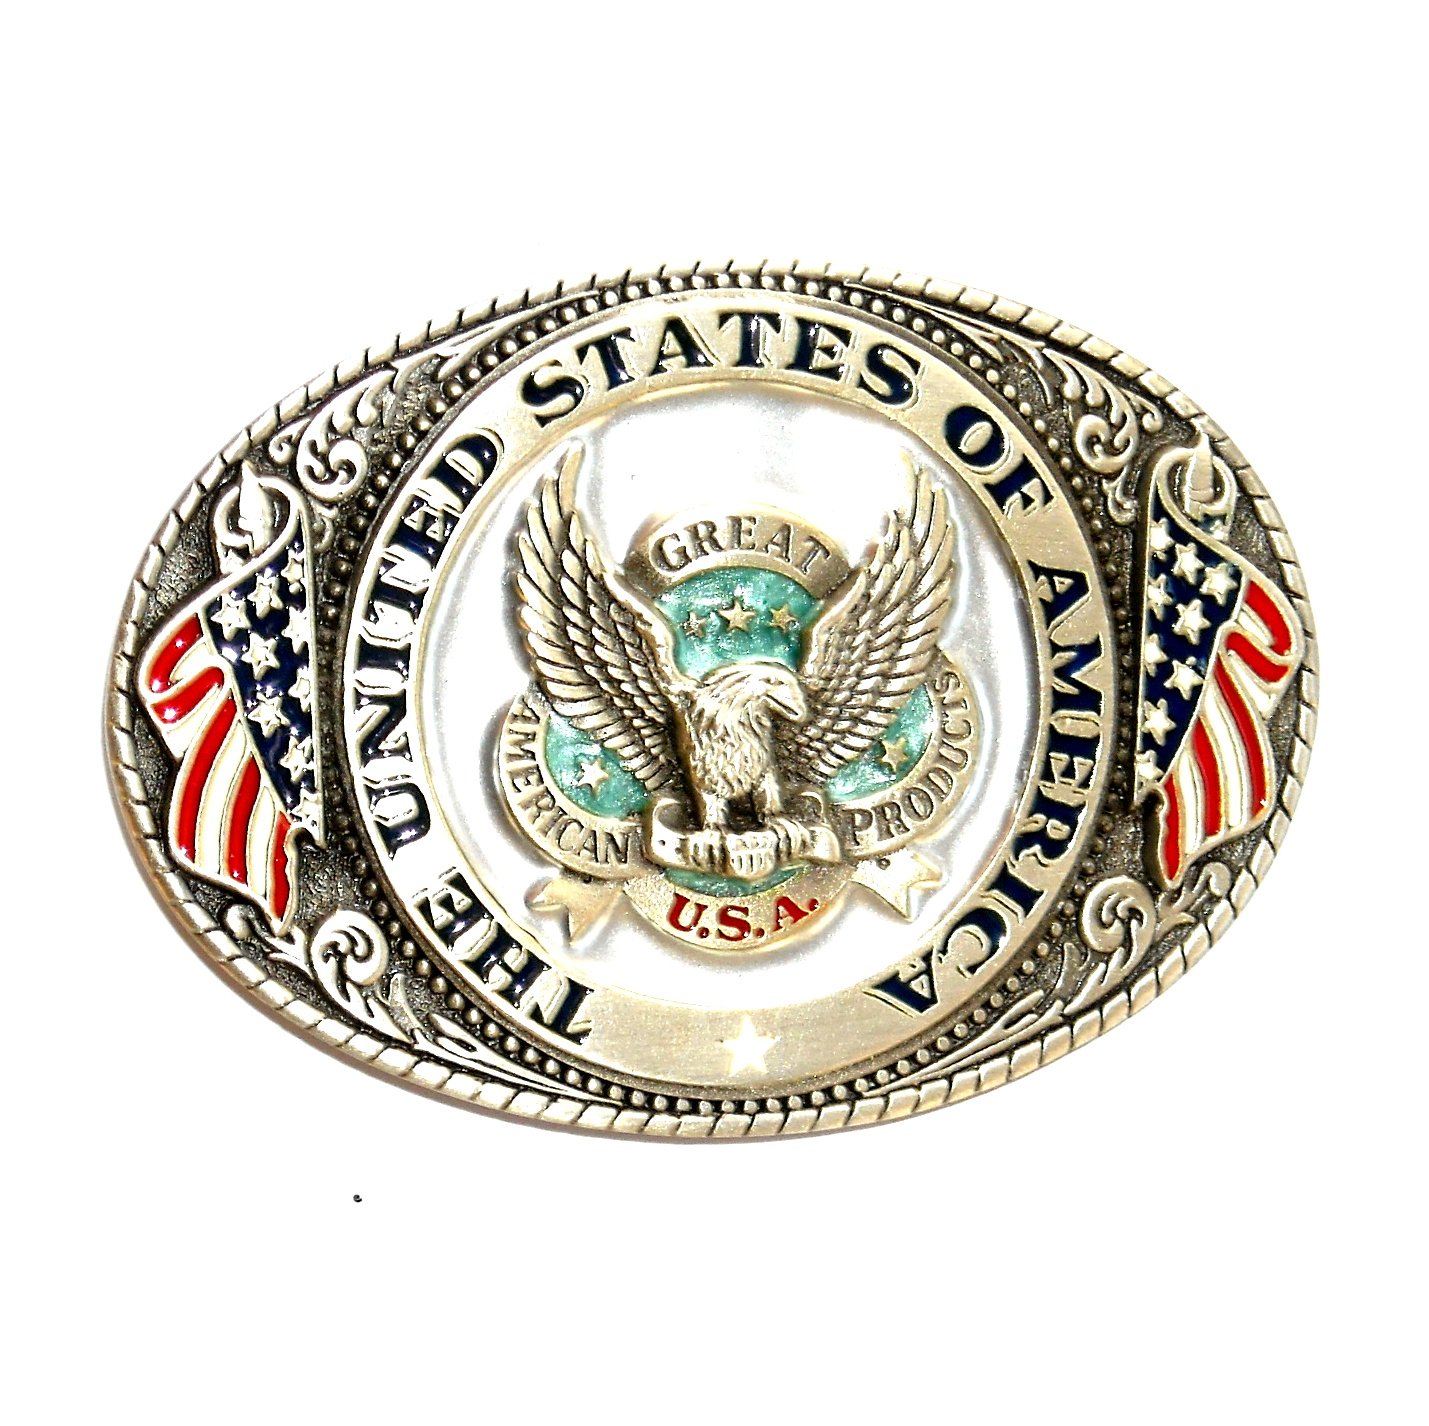 United States of America Vintage Great American Pewter Belt Buckle